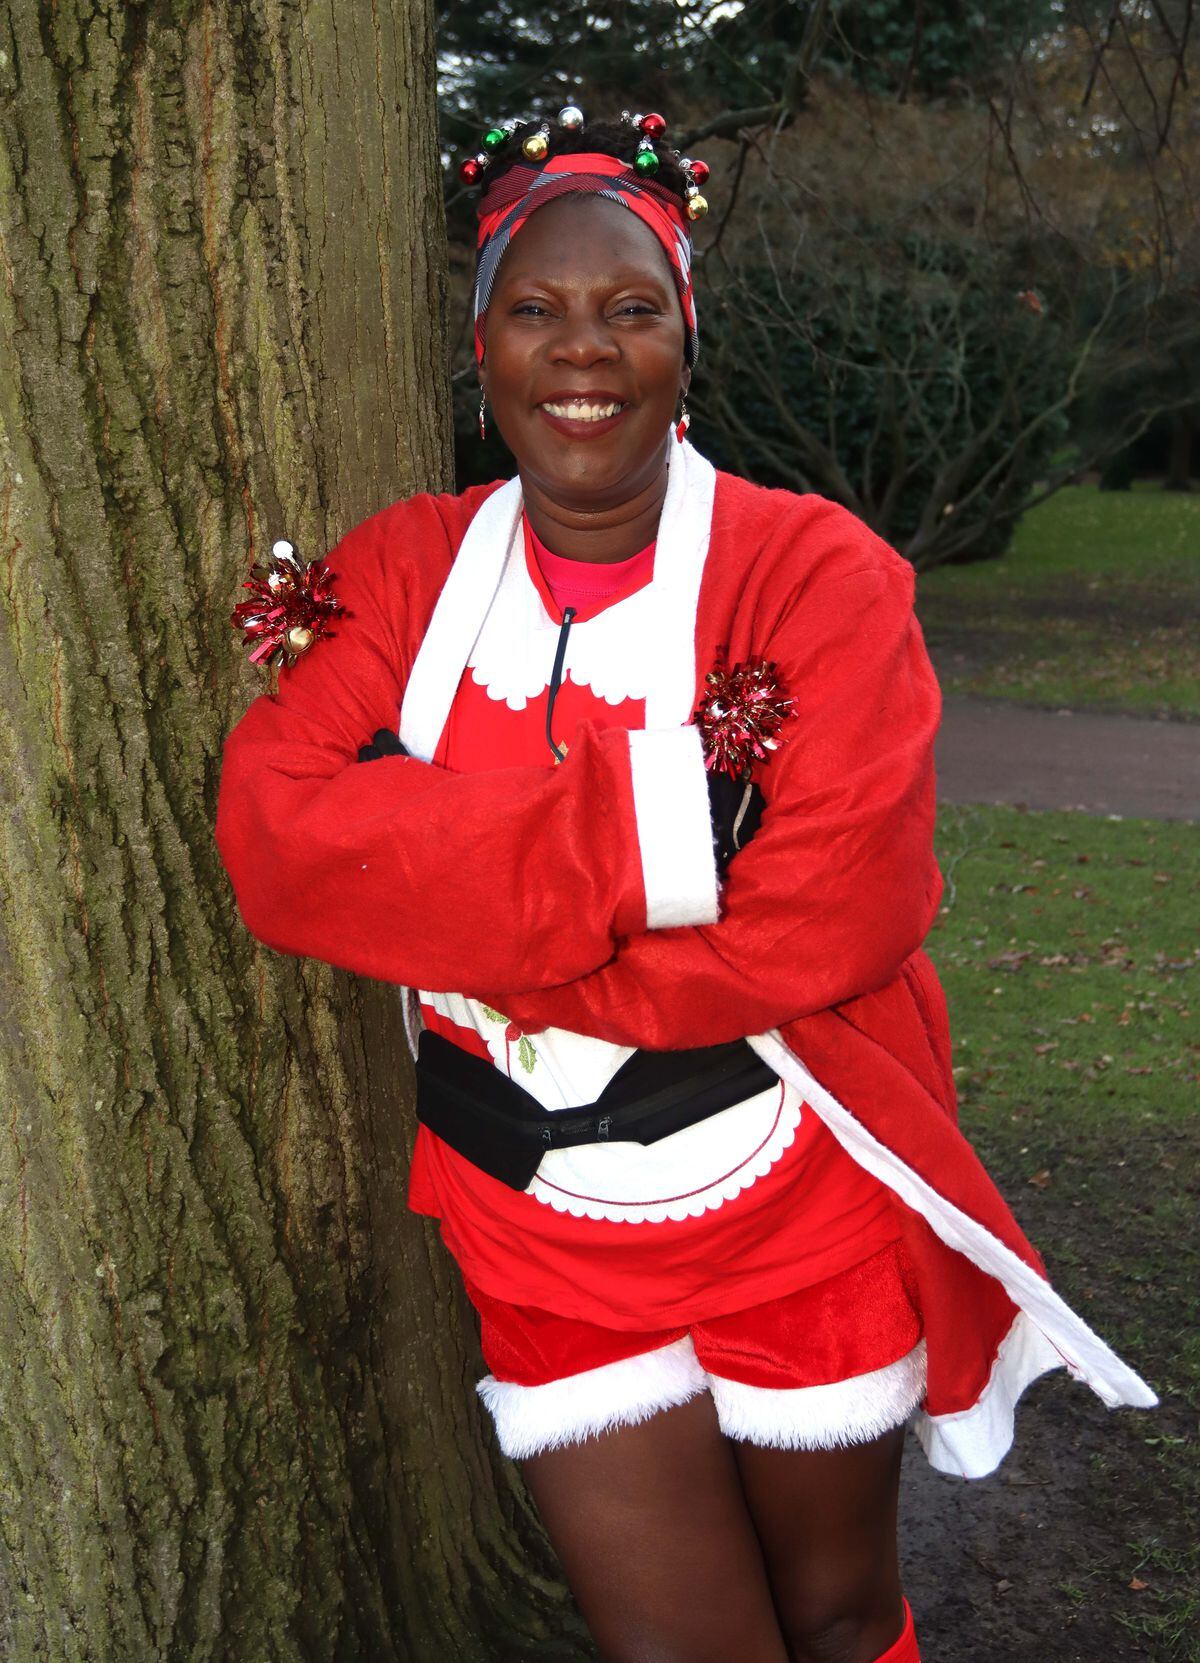 Martha Cummings helped everyone warm up before the Santa Run